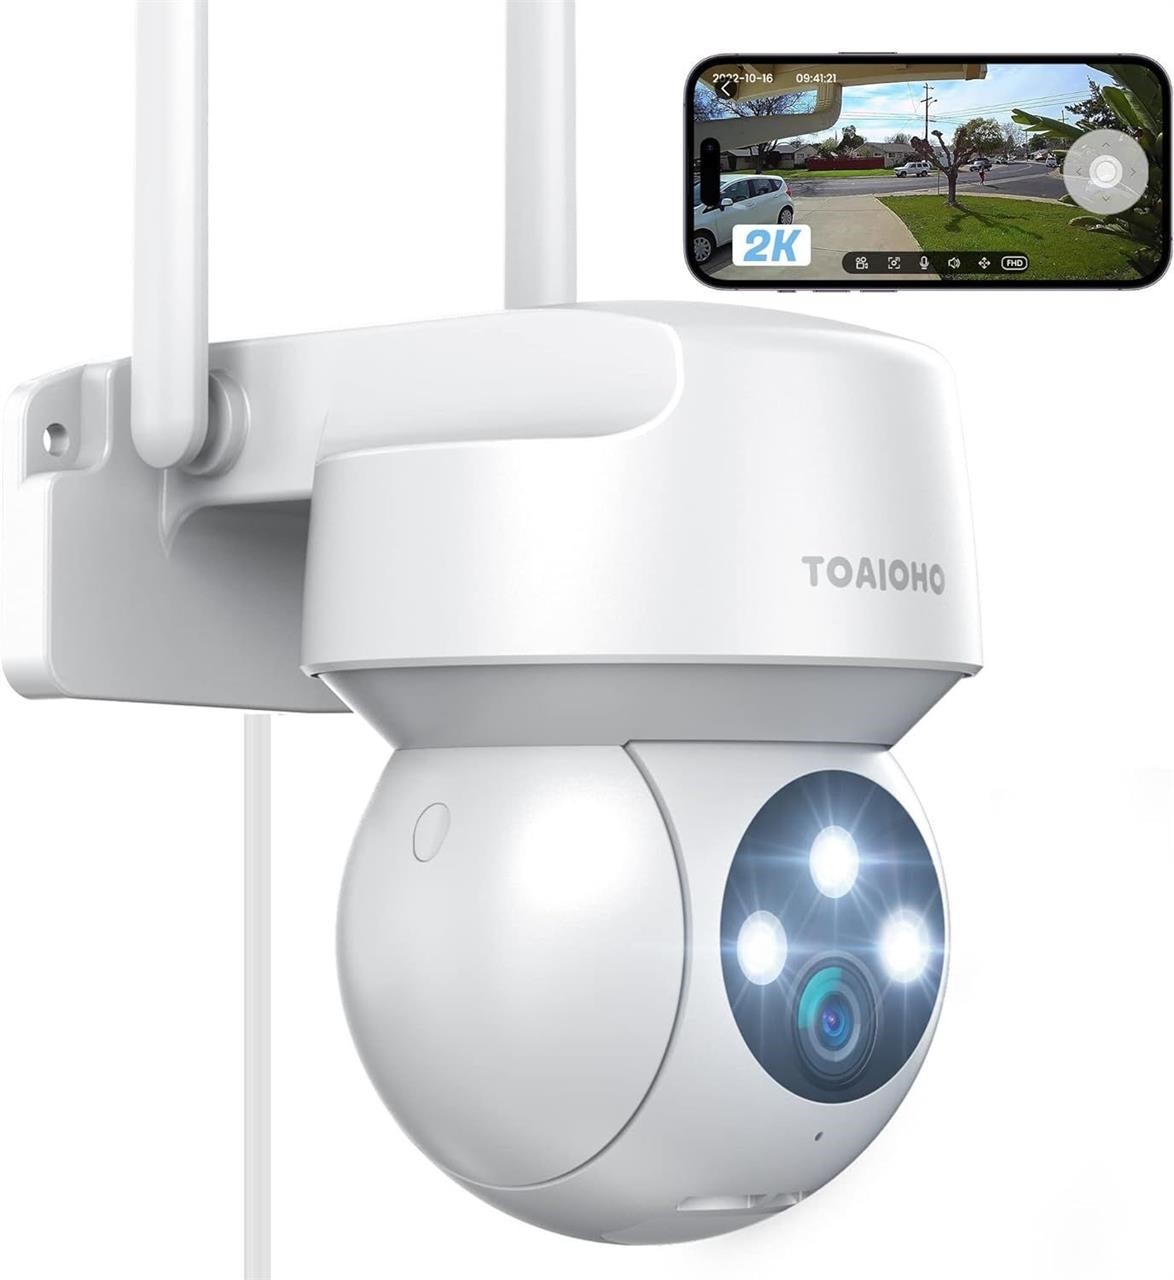 NEW $80 Outdoor WIFI Security Camera AI Tracker 2K